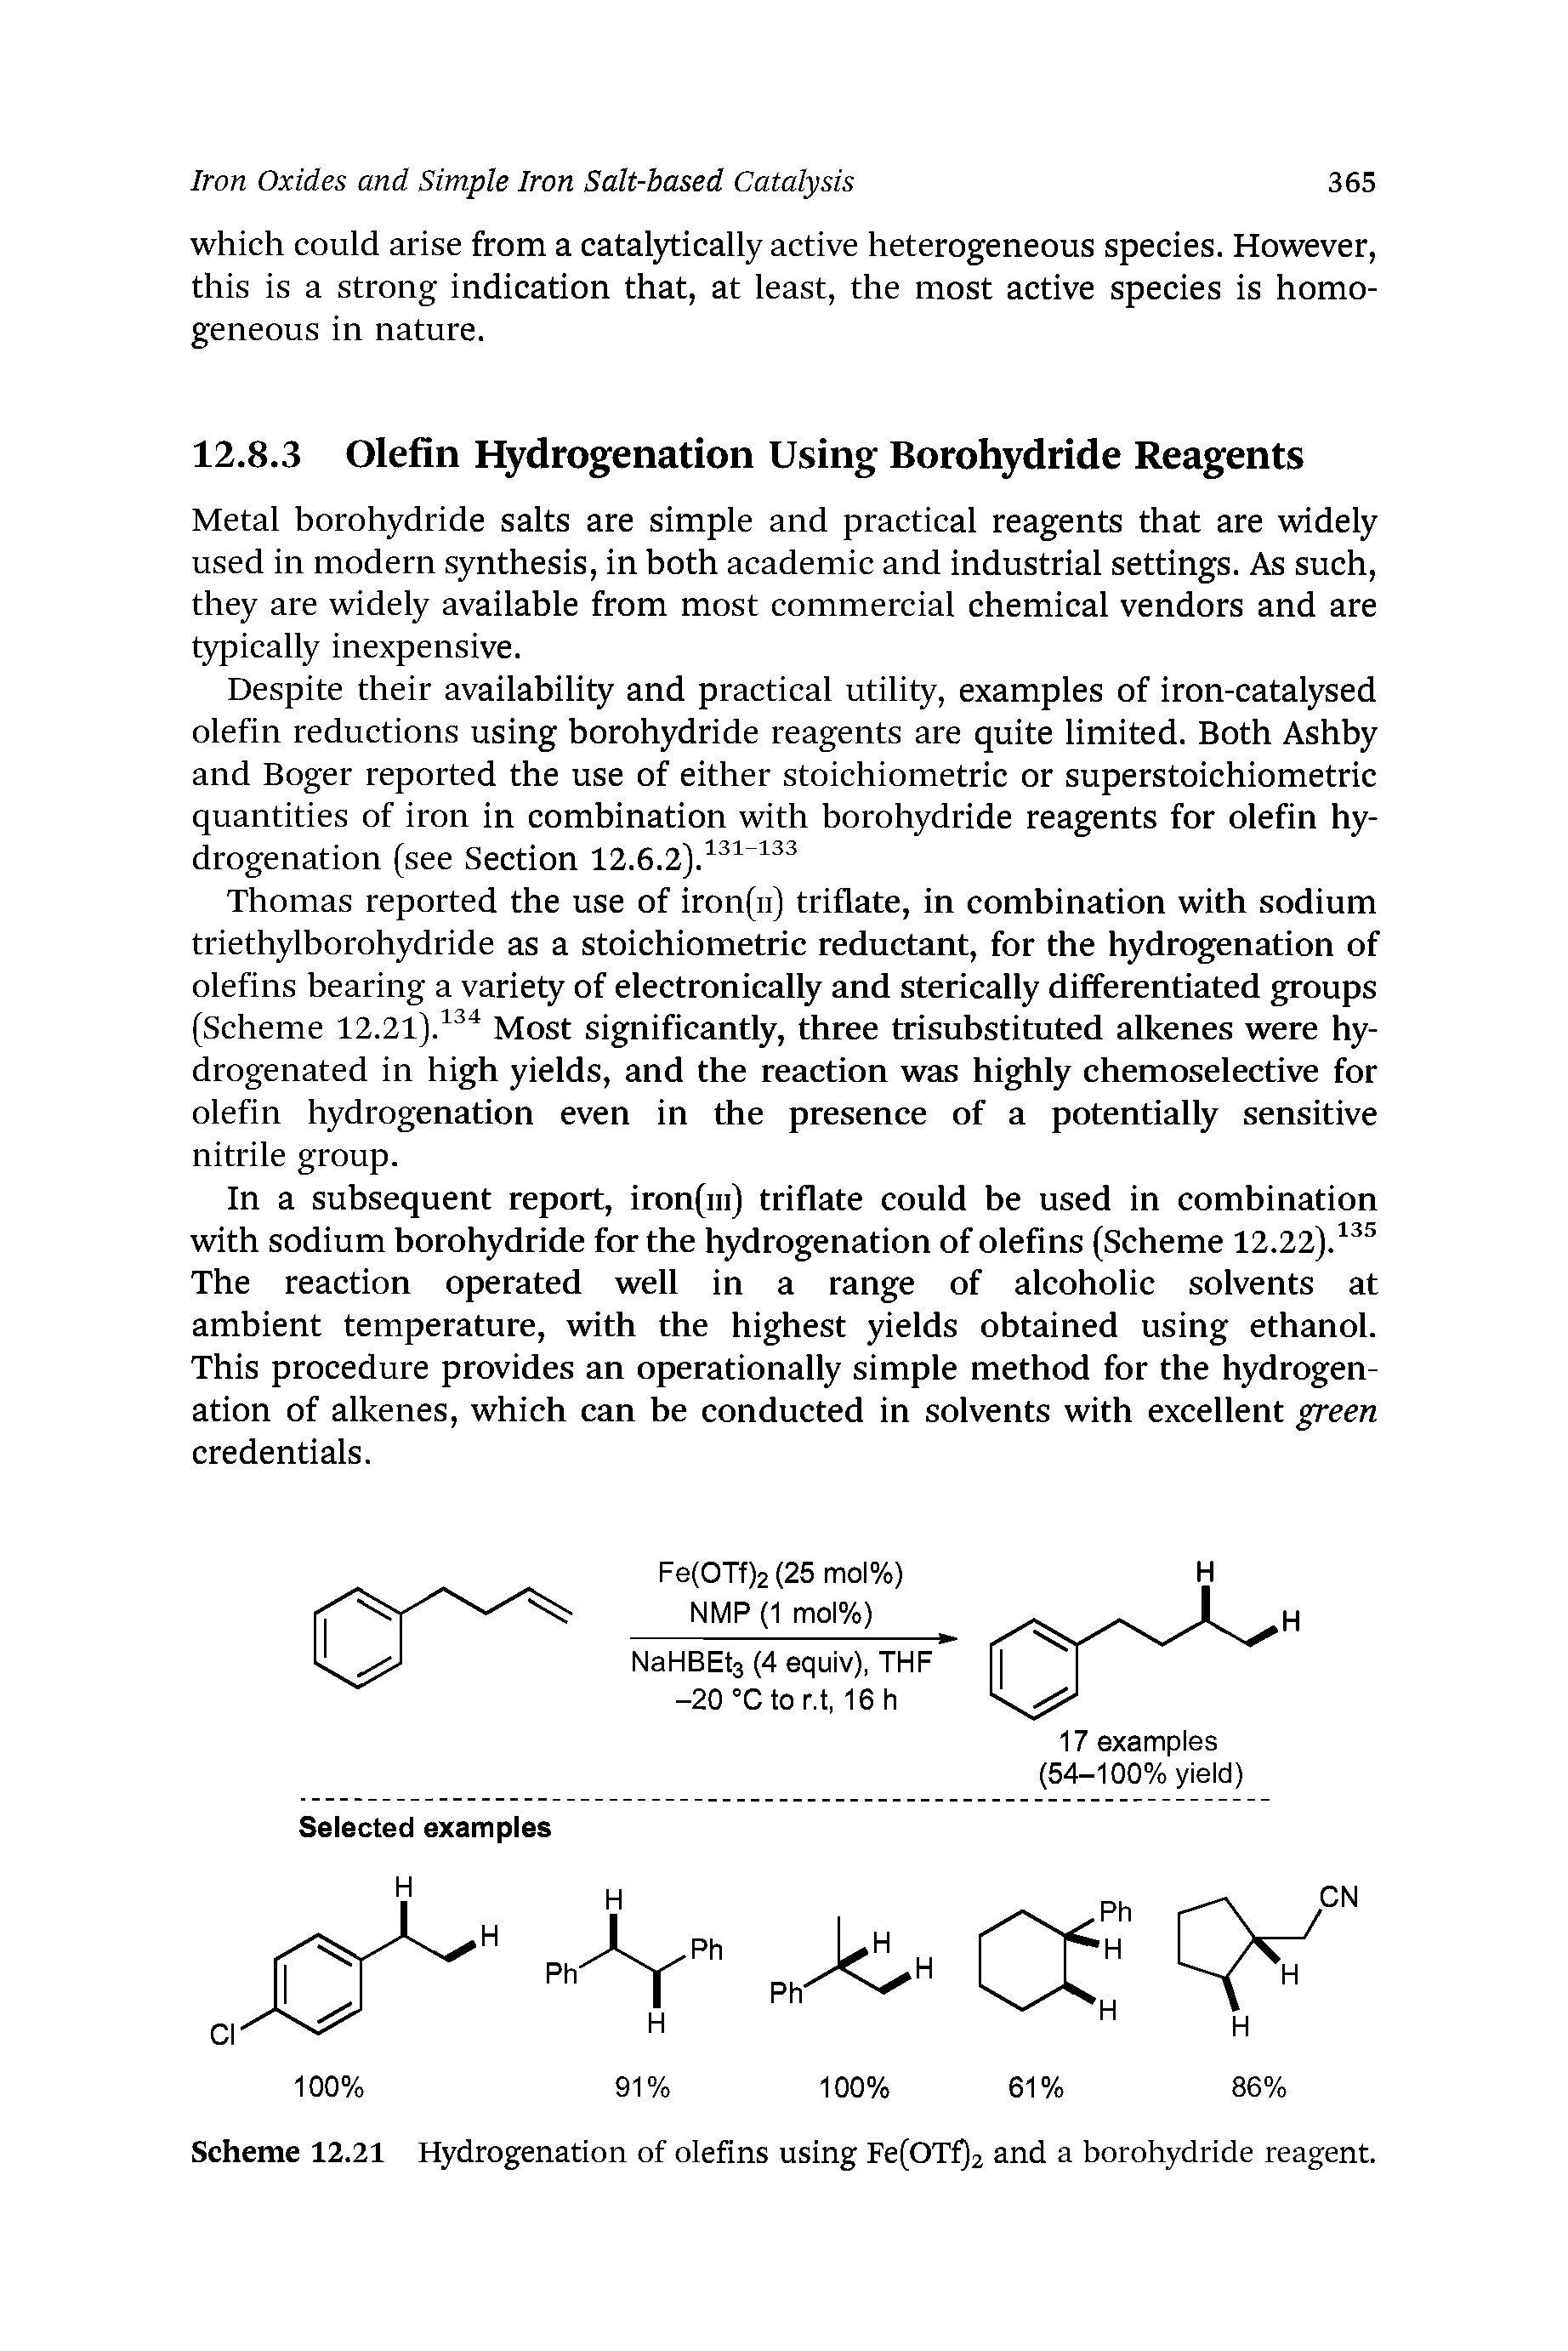 Scheme 12.21 Hydrogenation of olefins using Fe(OTQ2 and a borohydride reagent.